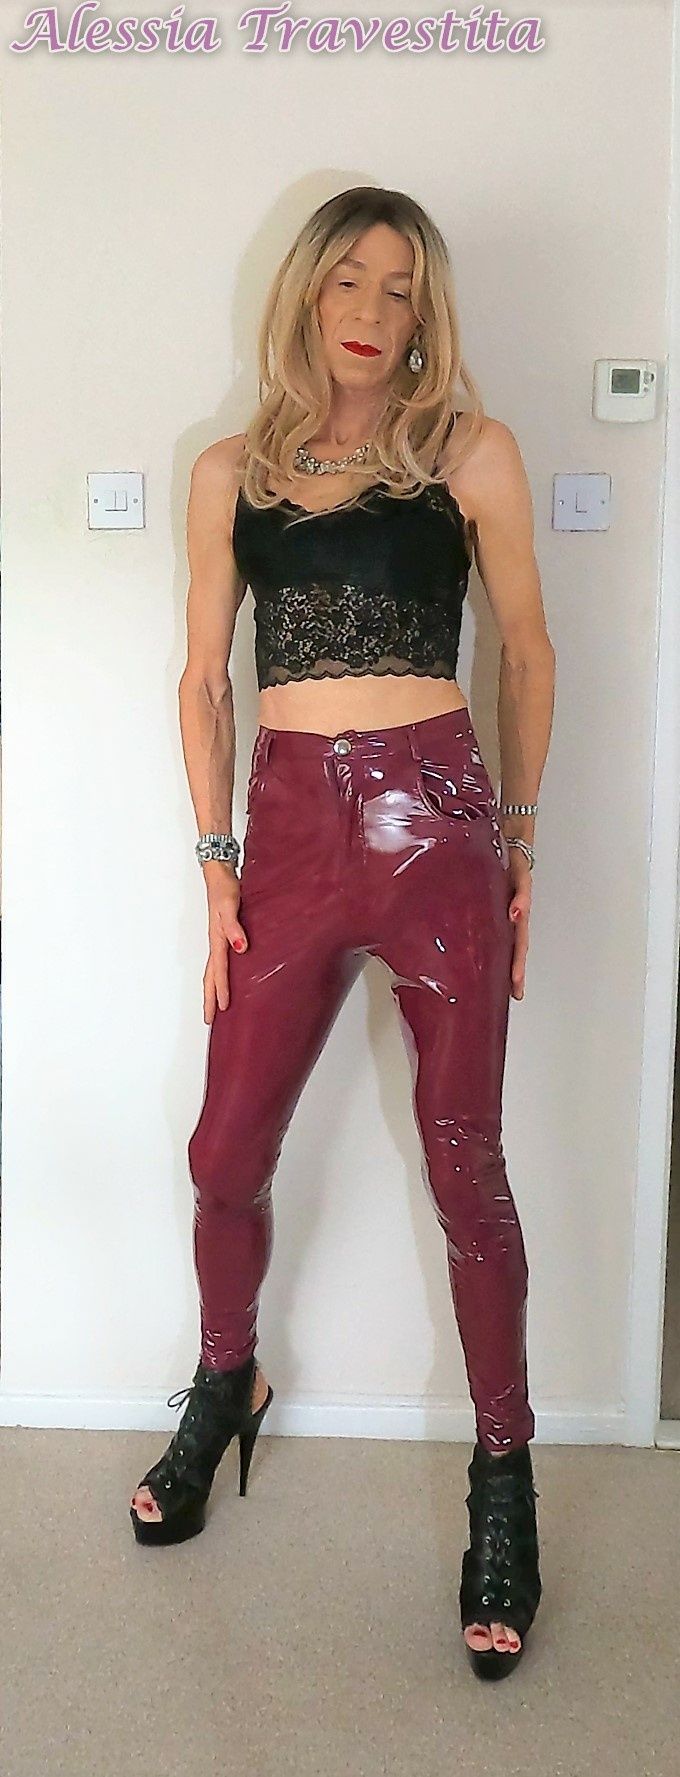 76 Alessia Travestita in Burgundy PVC Jeans #38